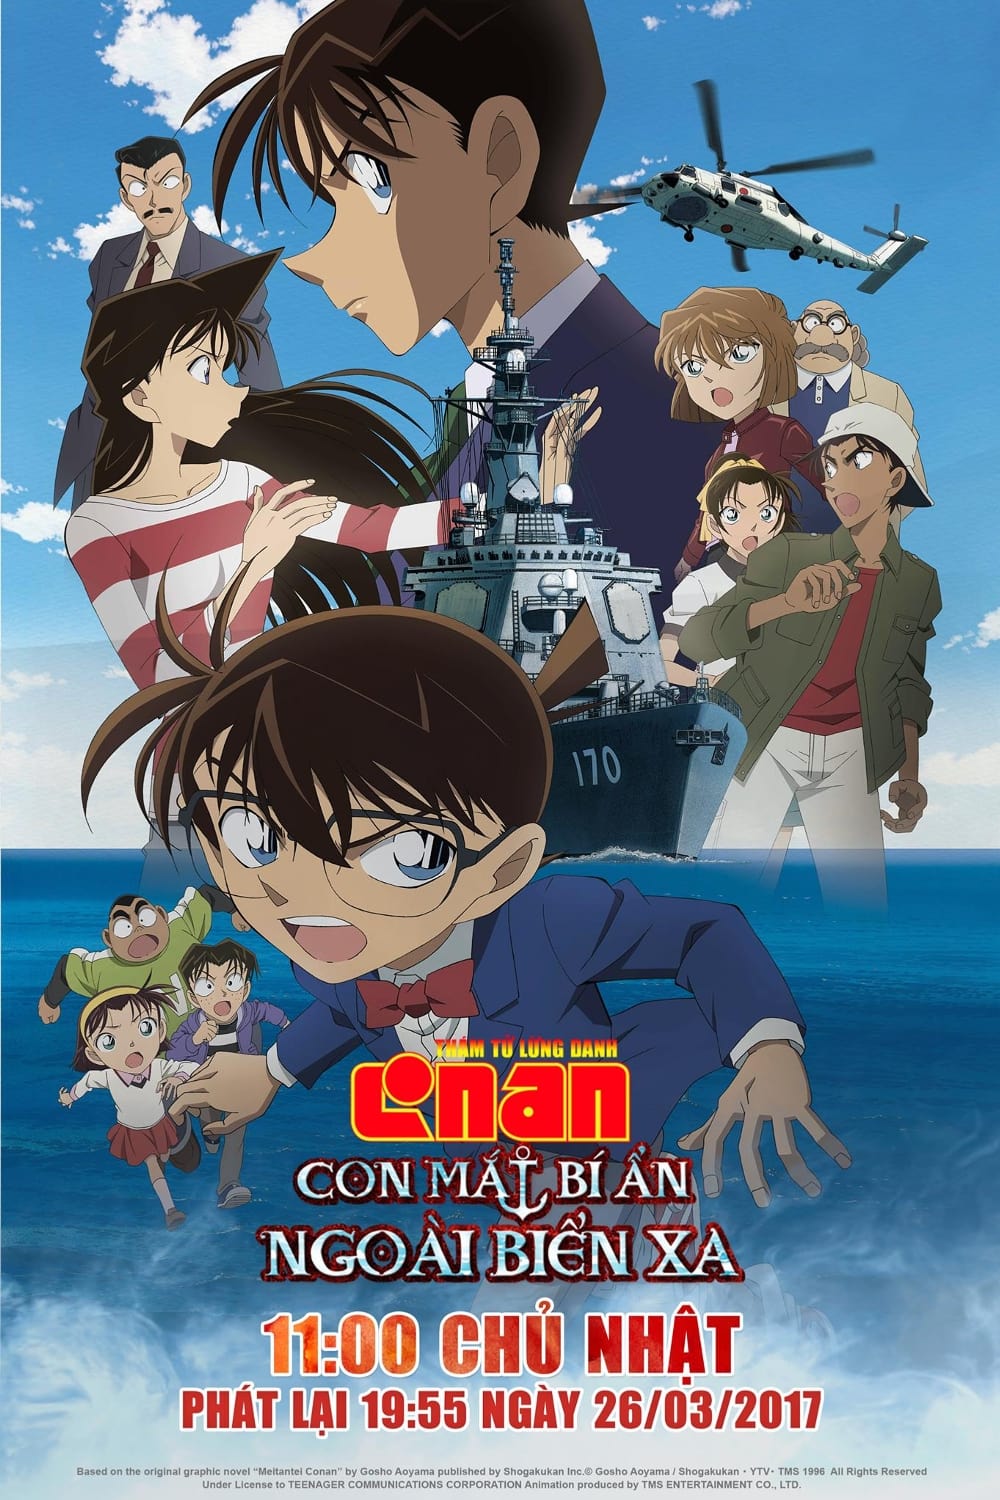 Thám Tử Lừng Danh Conan 17: Con Mắt Bí Ẩn Ngoài Biển Xa (Detective Conan: Private Eye in the Distant Sea) [2013]